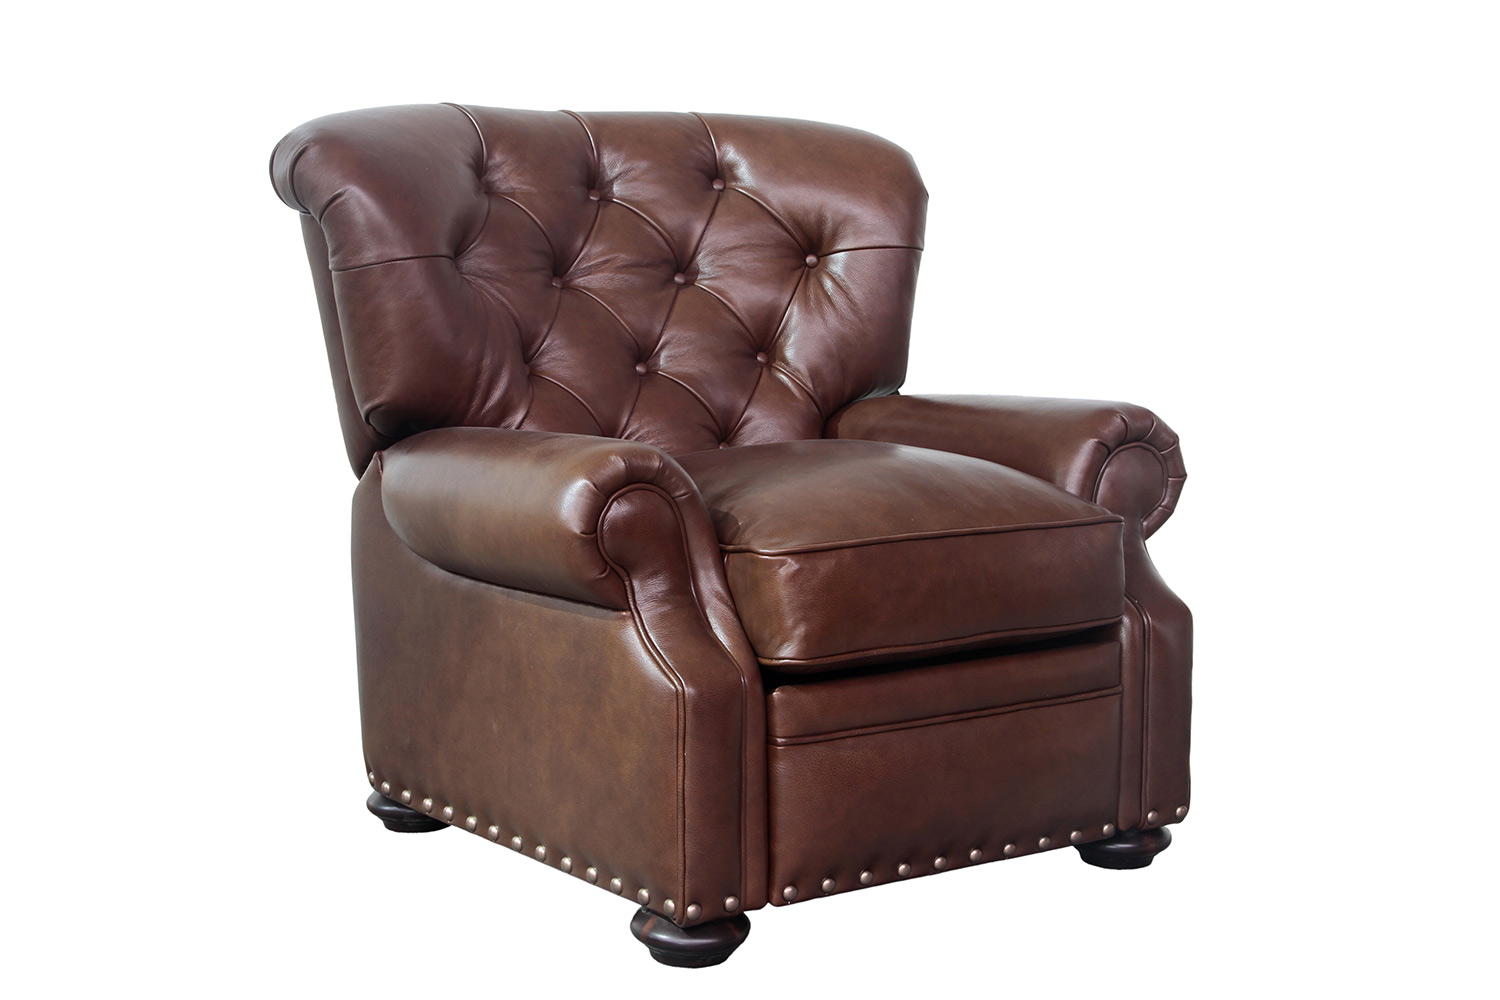 Barcalounger Sinclair Recliner Chair - Shoreham Chocolate/All Leather